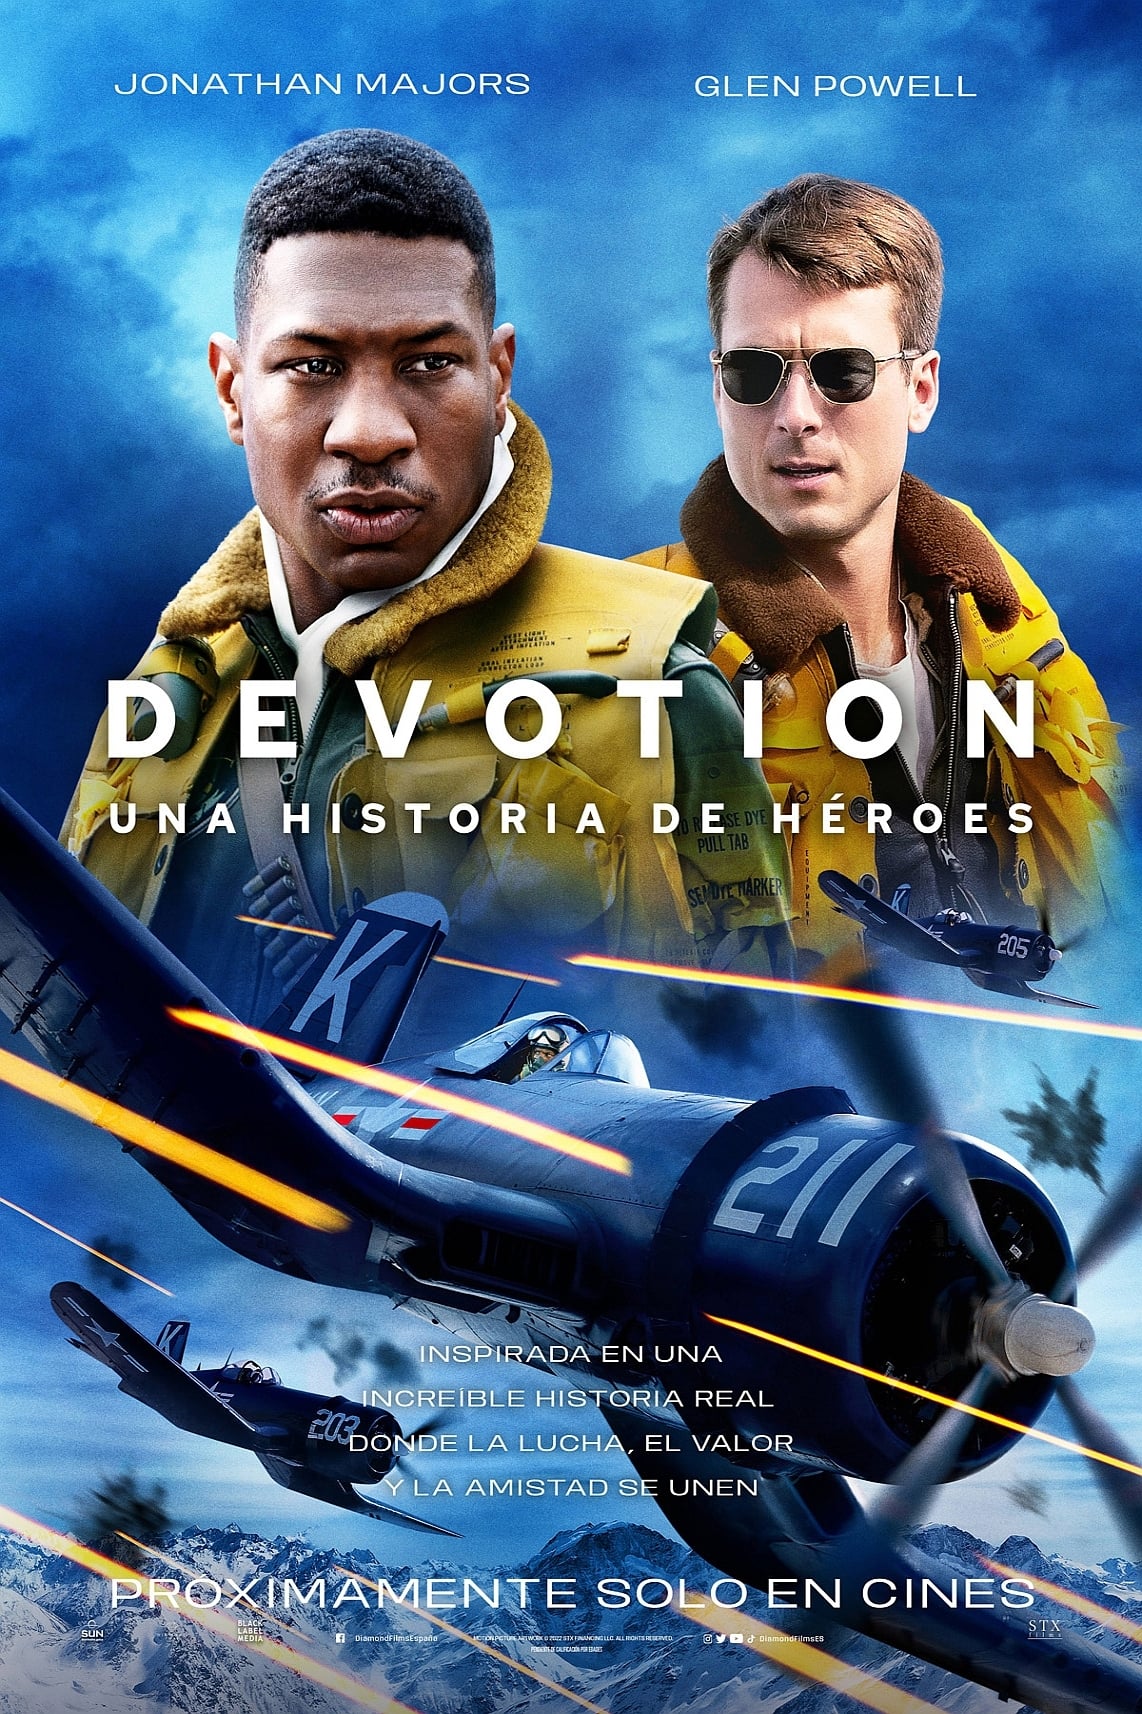 Devotion poster